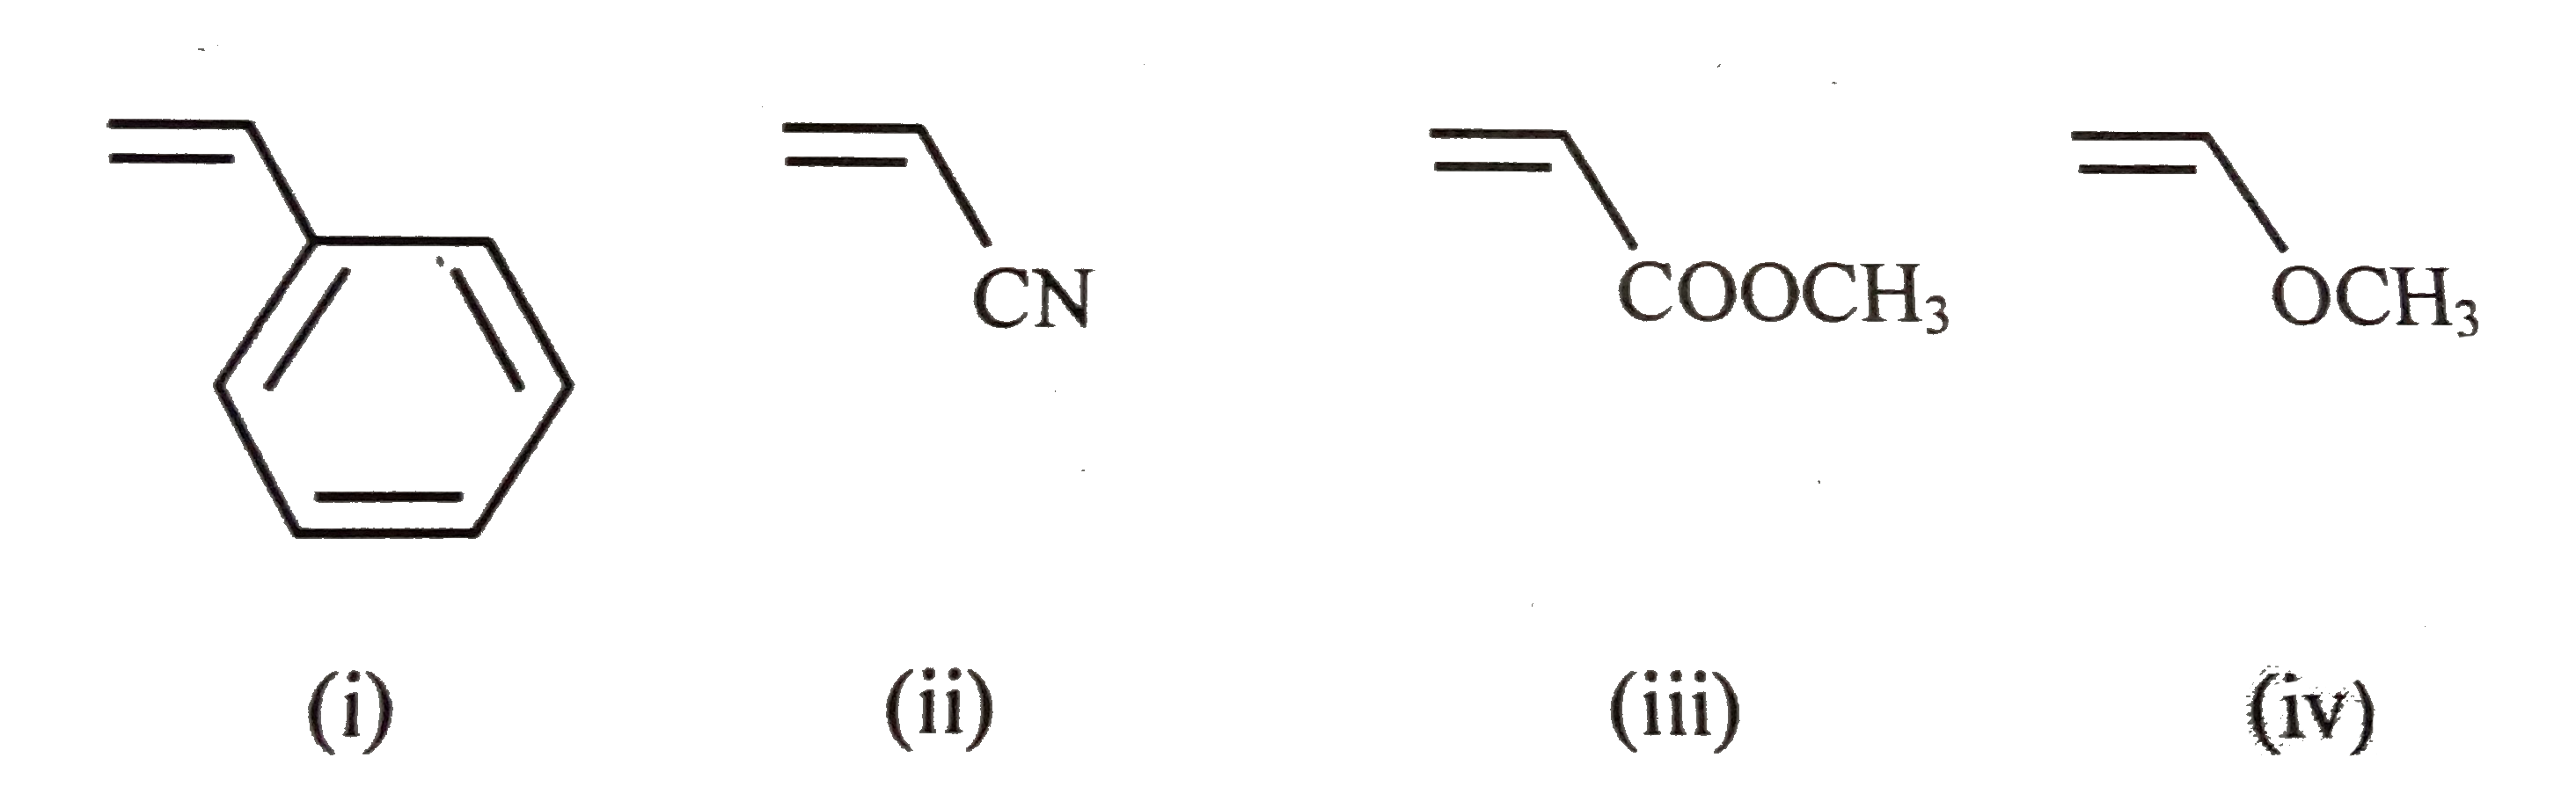 Among i-iv      the compound that does not undergo polymerization under radical initiation, is